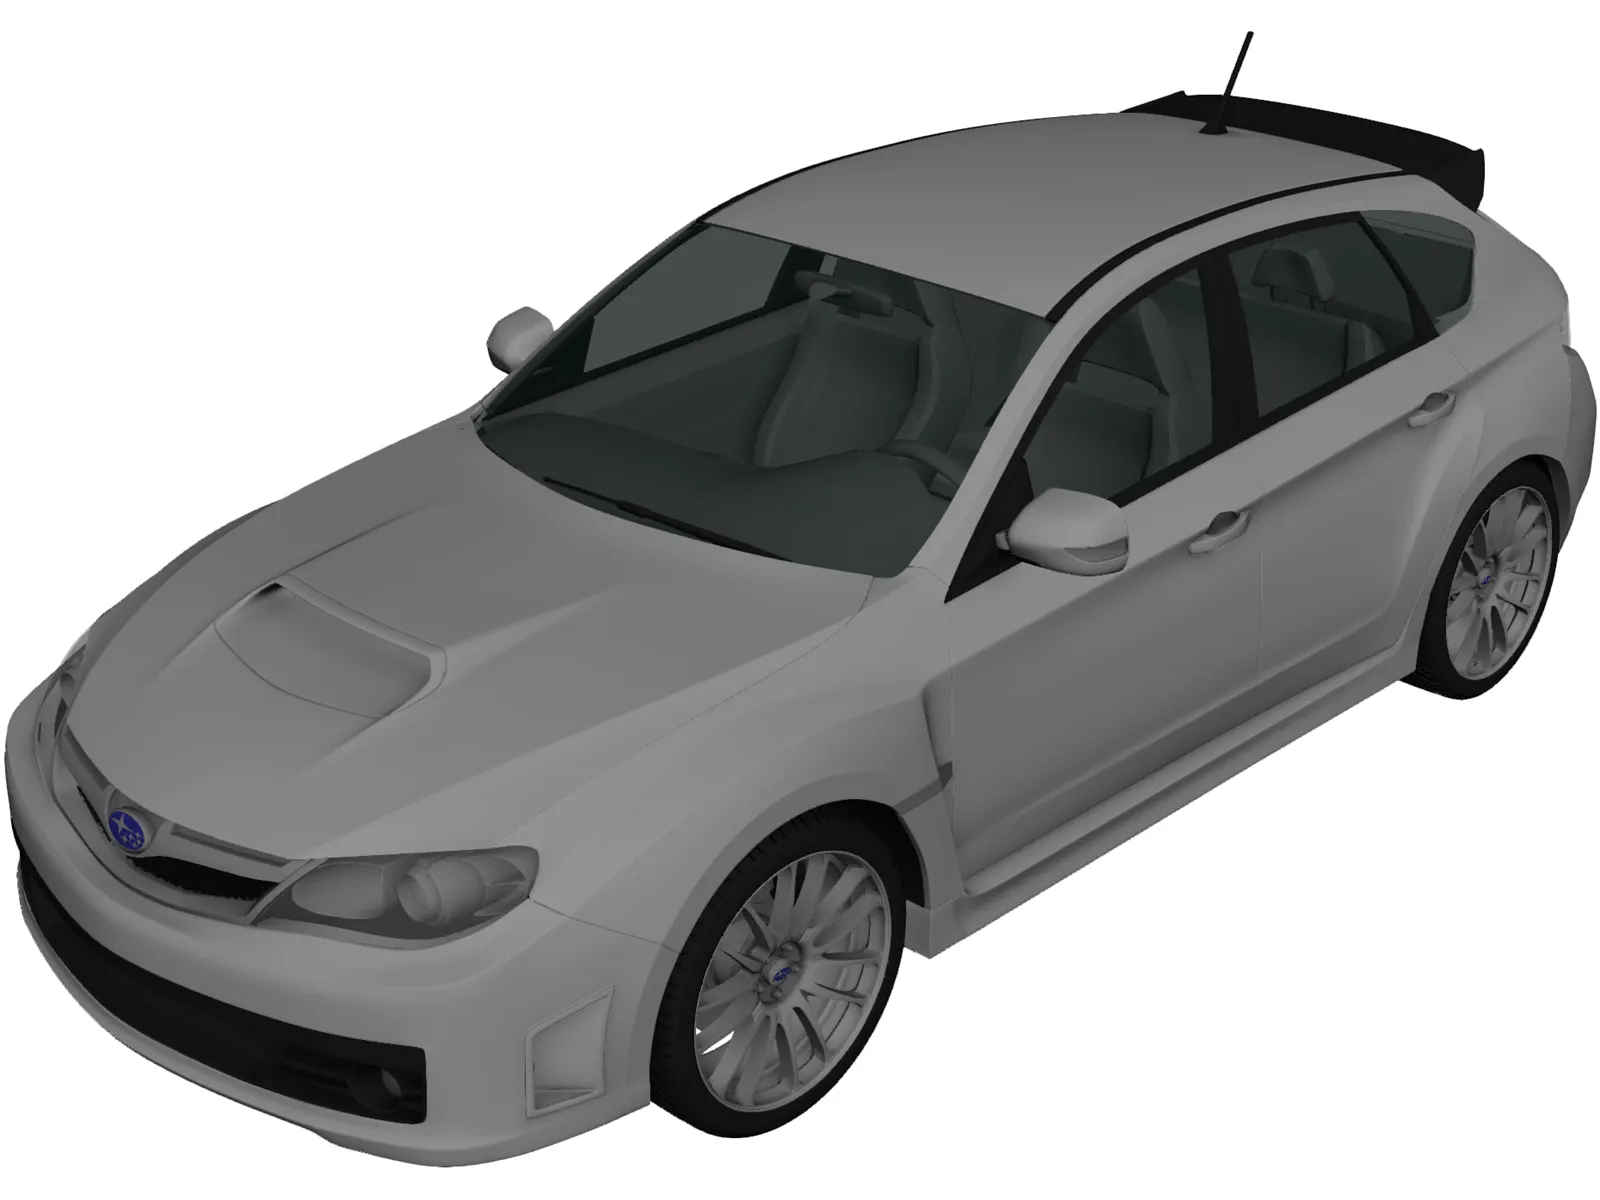 Subaru Impreza WRX Sti (2010) 3D Model